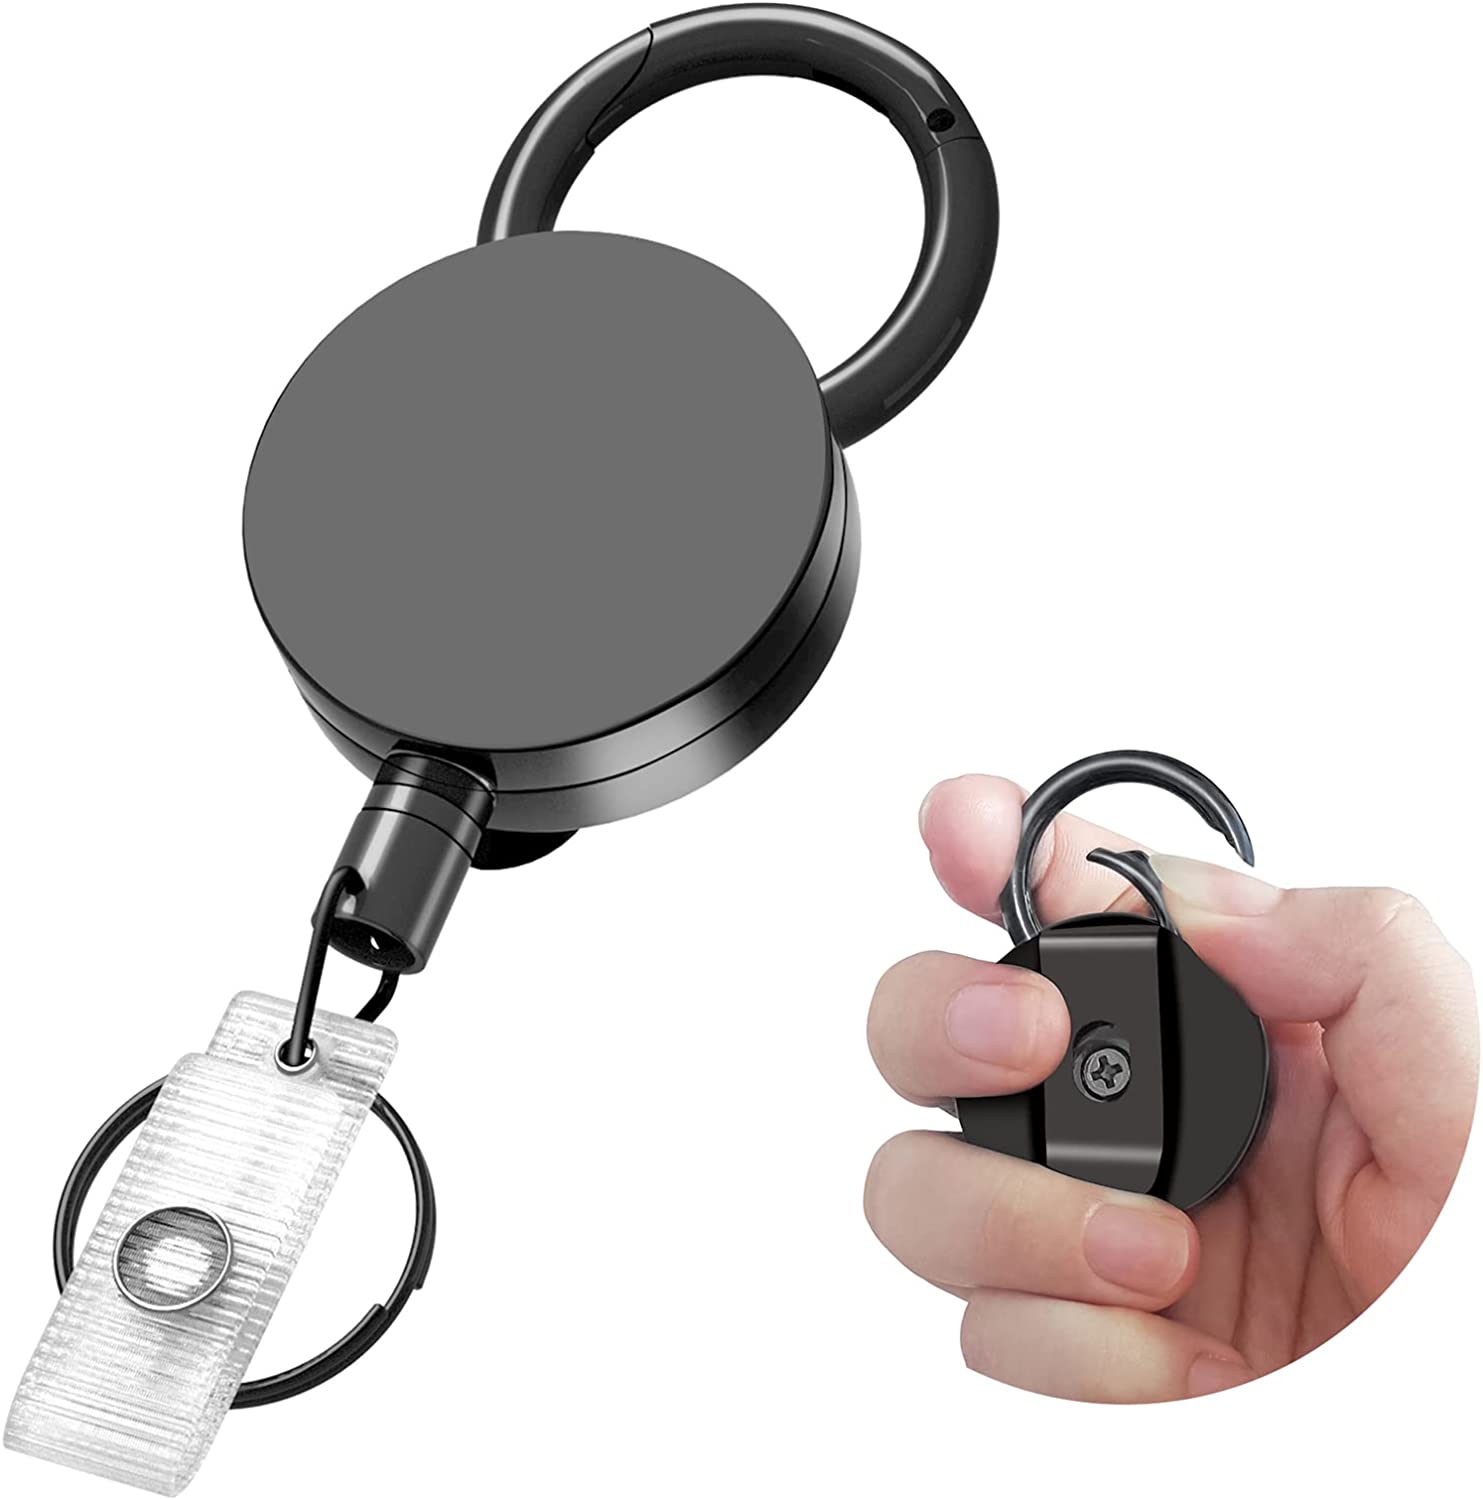 Portable key chain